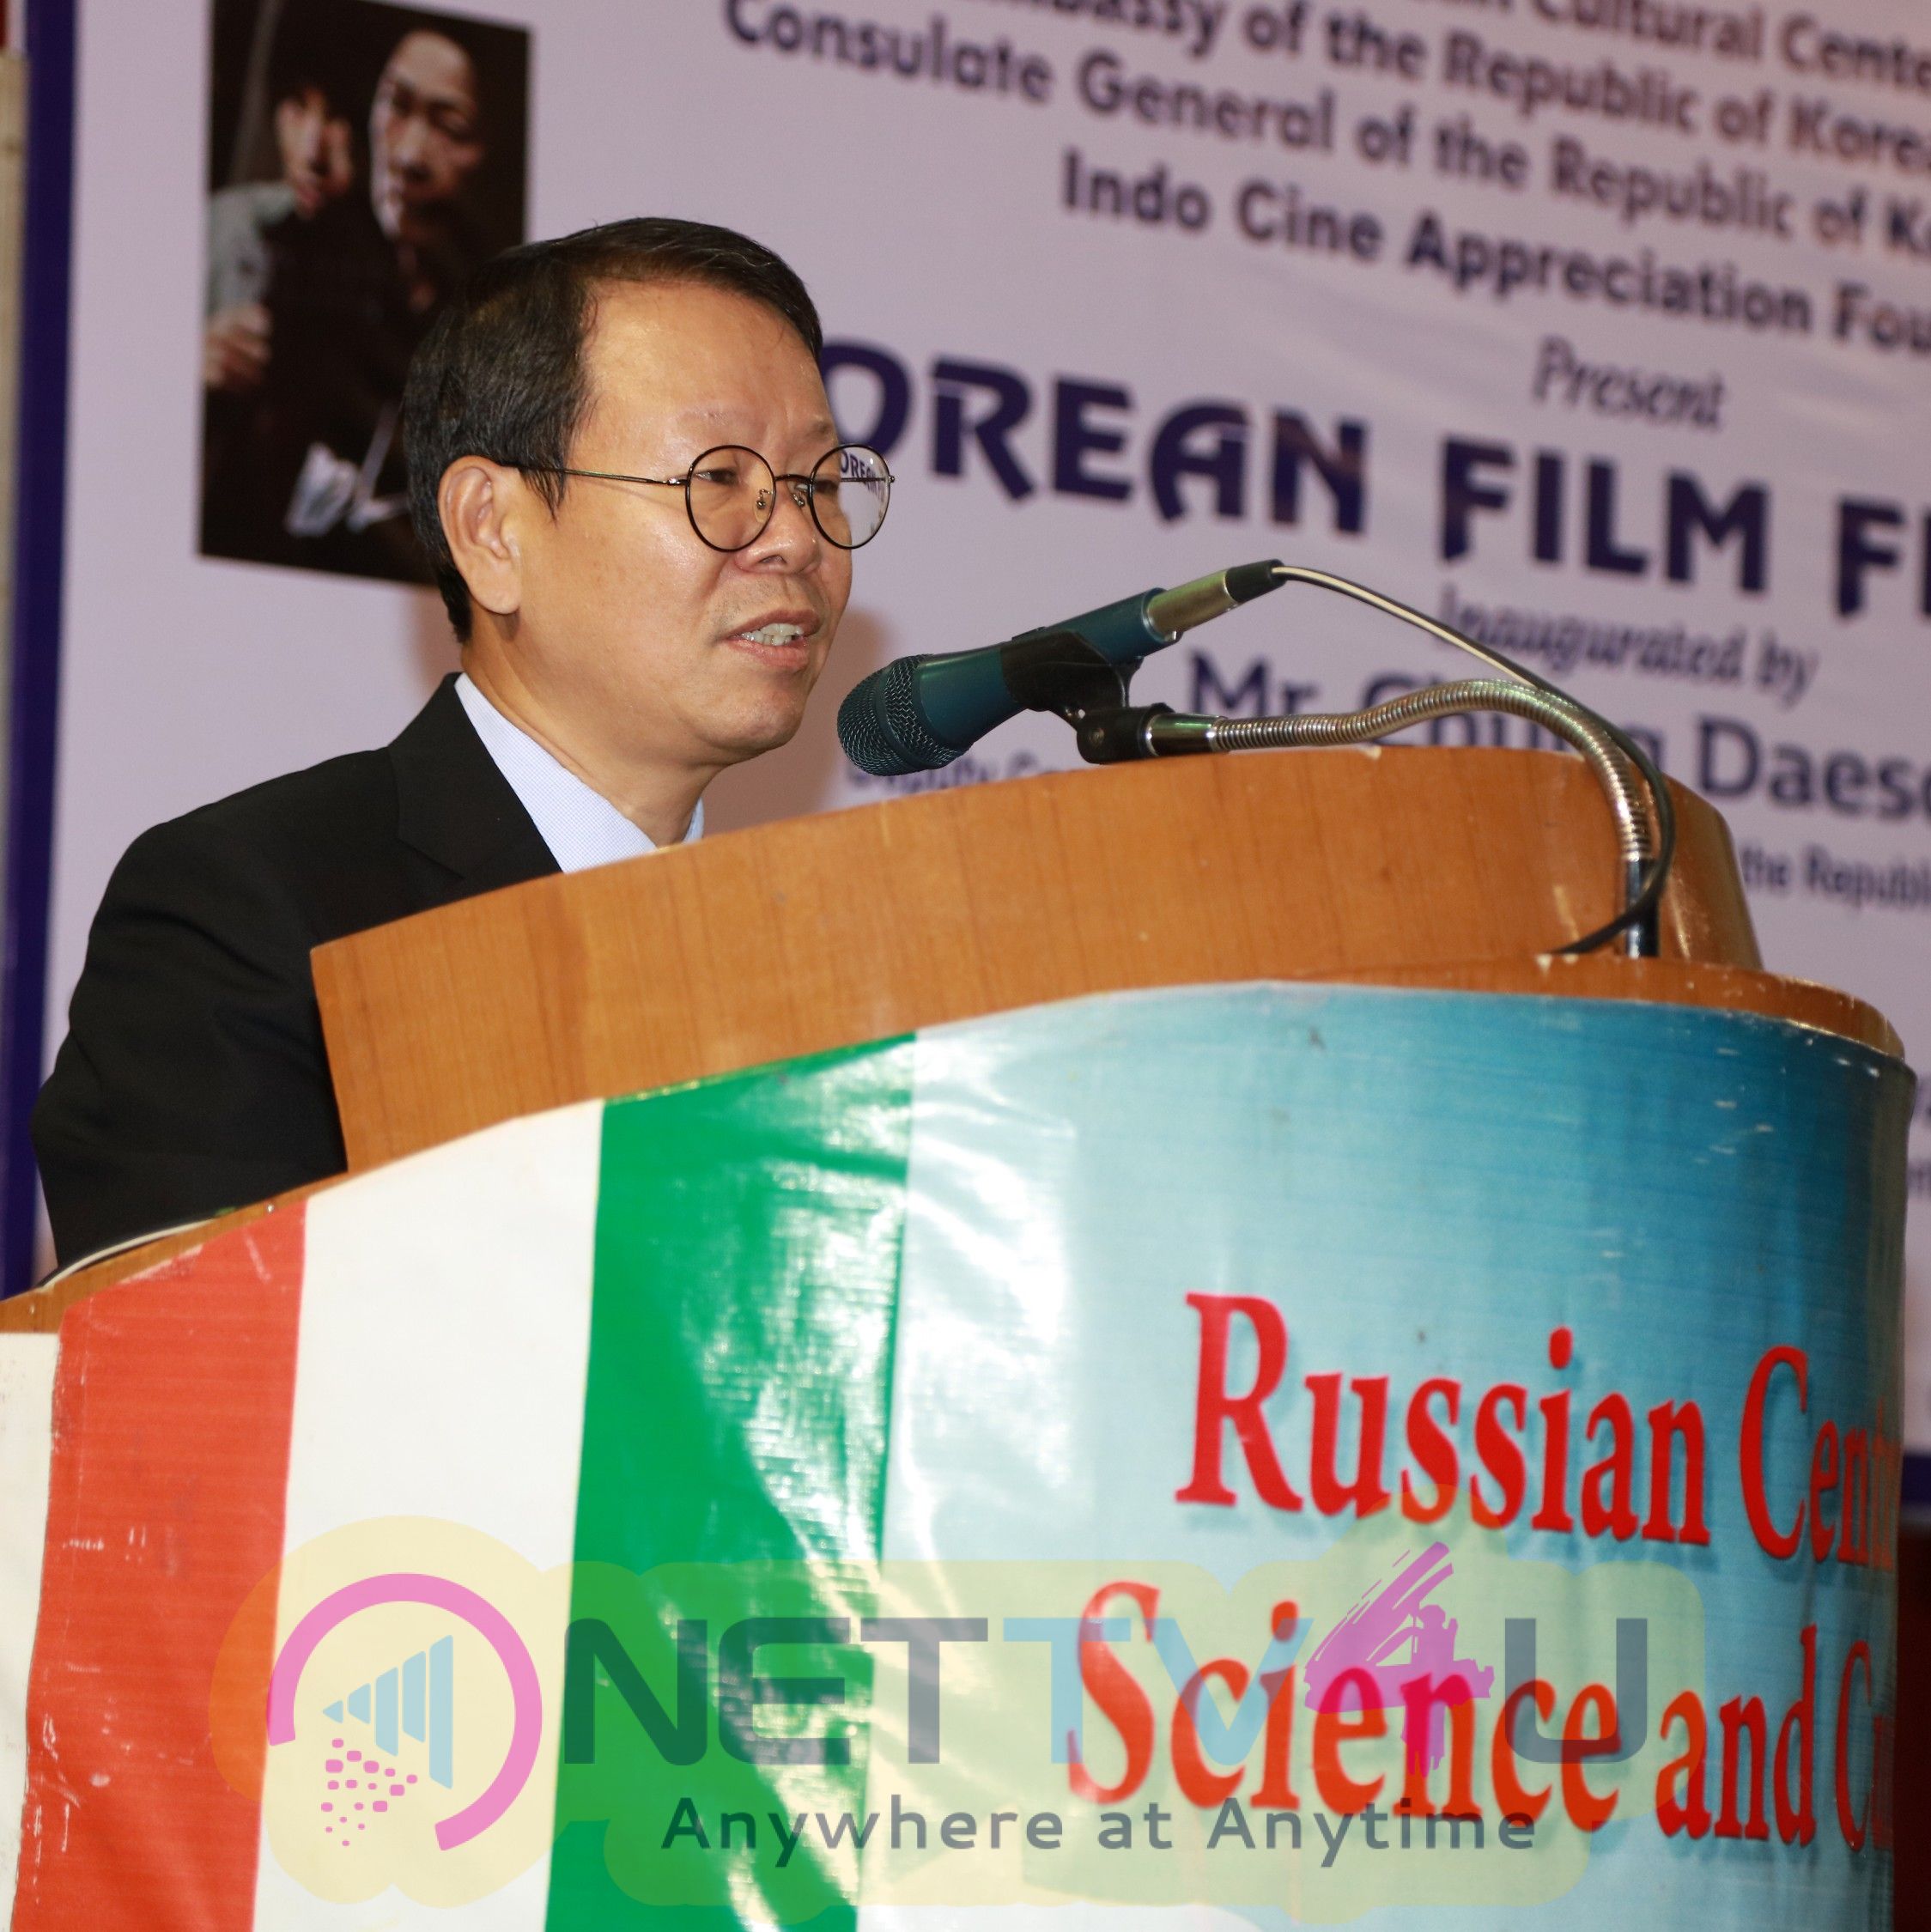 Korean Film Festival Inauguration Images Tamil Gallery